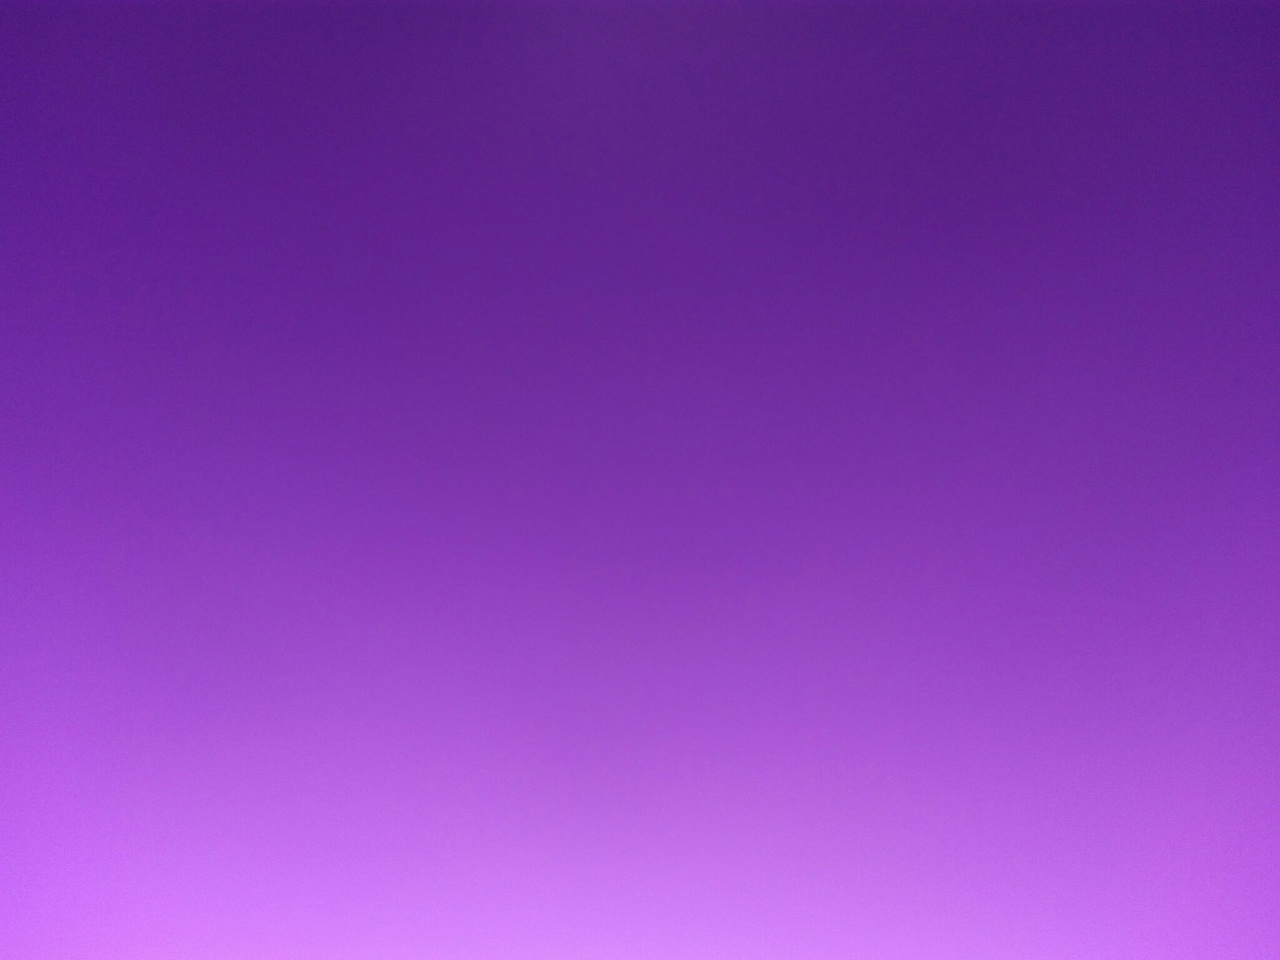 Morado, Purple, And Wallpaper Image - Colorfulness - HD Wallpaper 